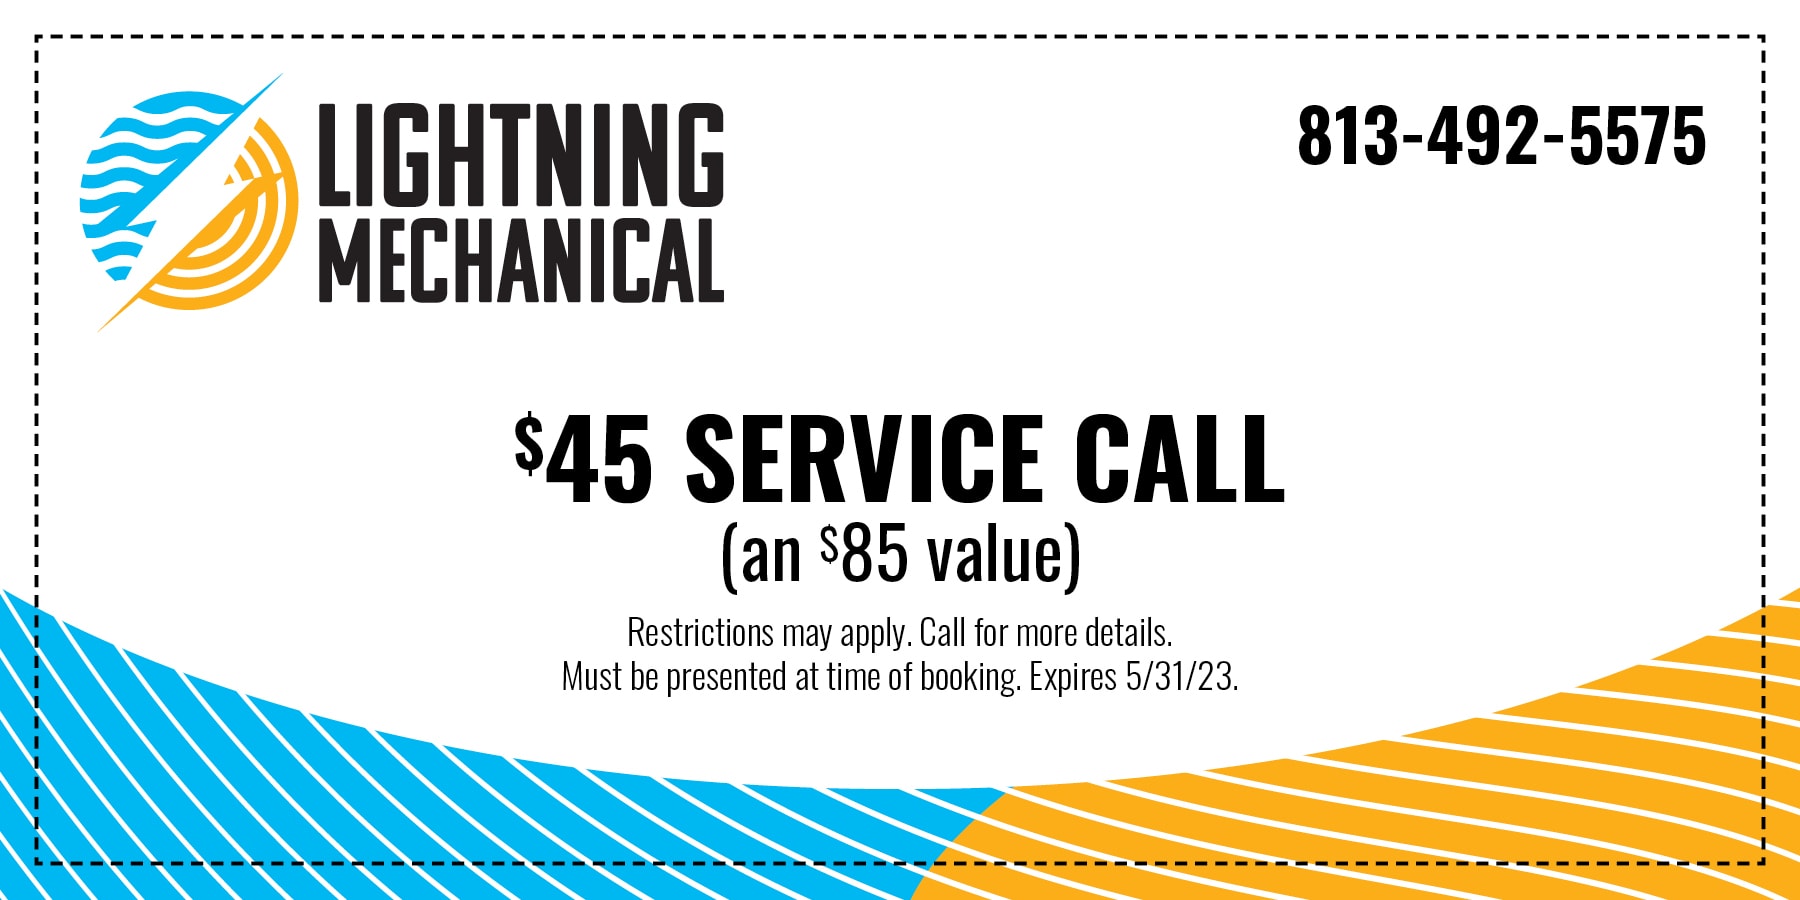  Service Call (an  value) expires 5/31/23